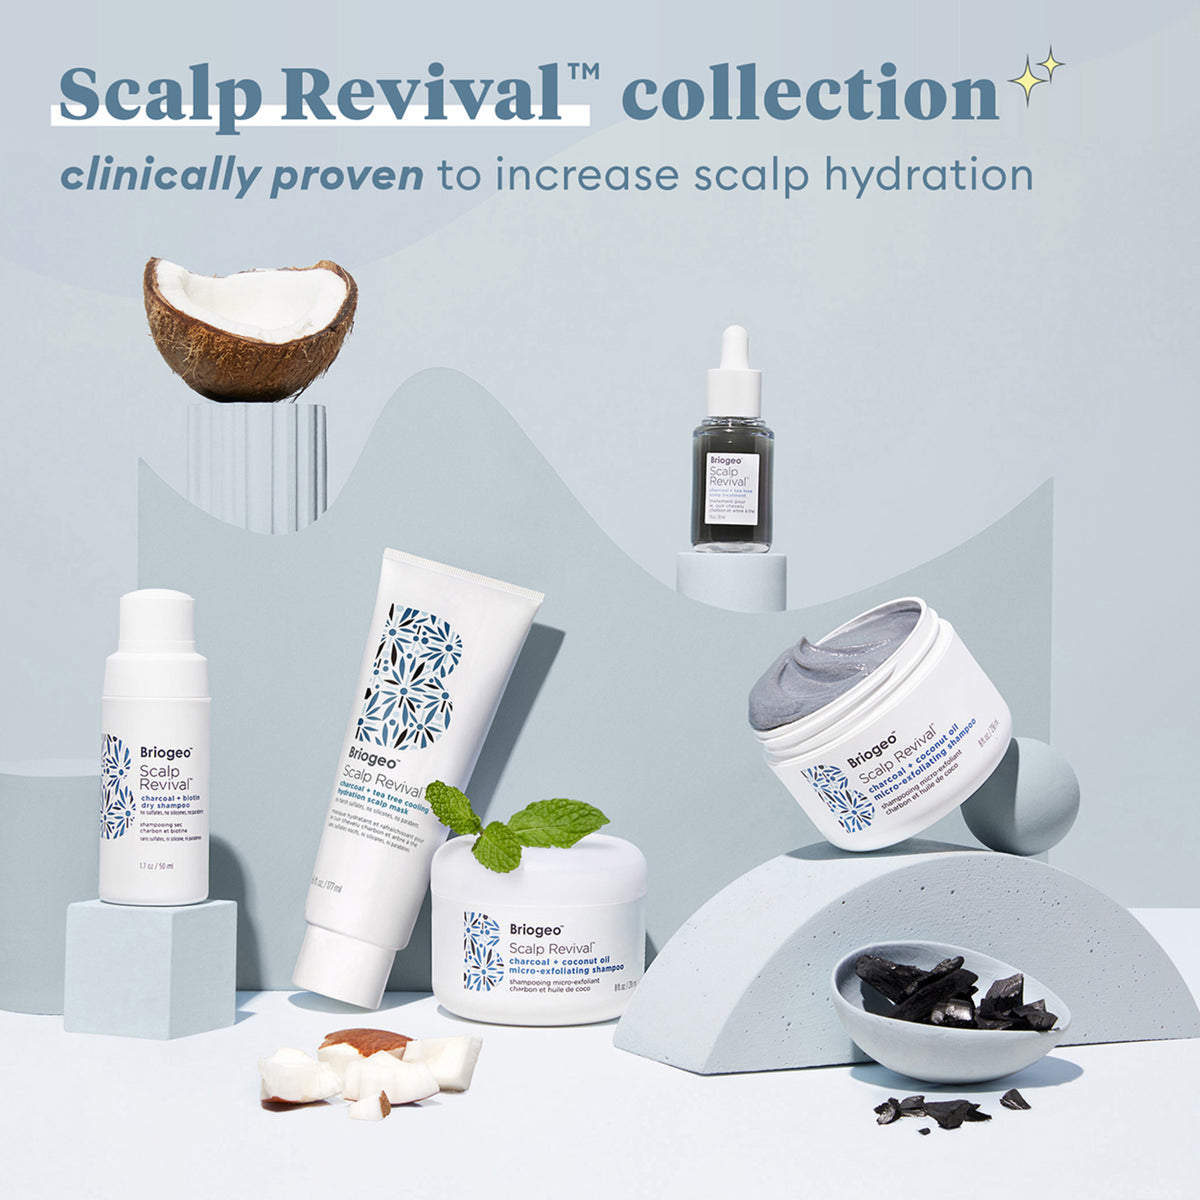 Briogeo Scalp Revival Charcoal and Biotin Dry Shampoo .